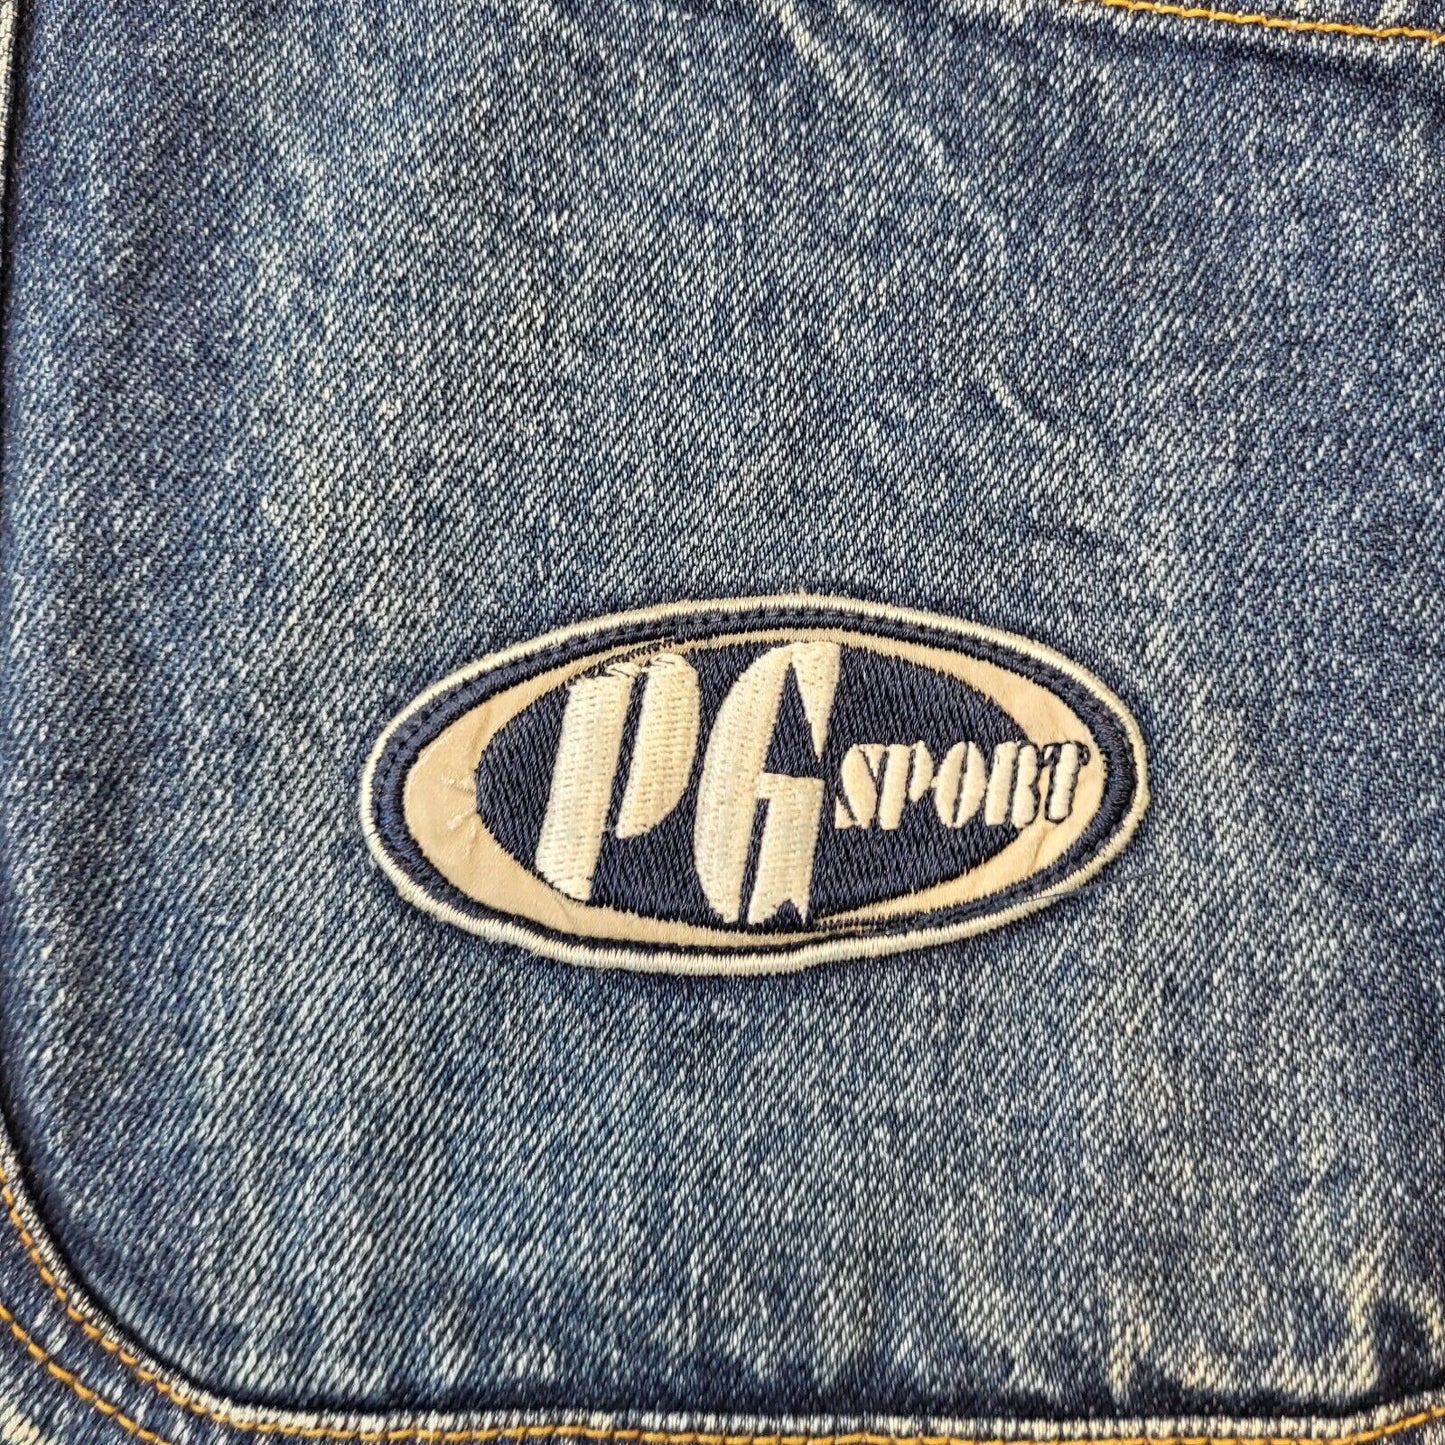 PG Sport Jacket (M)